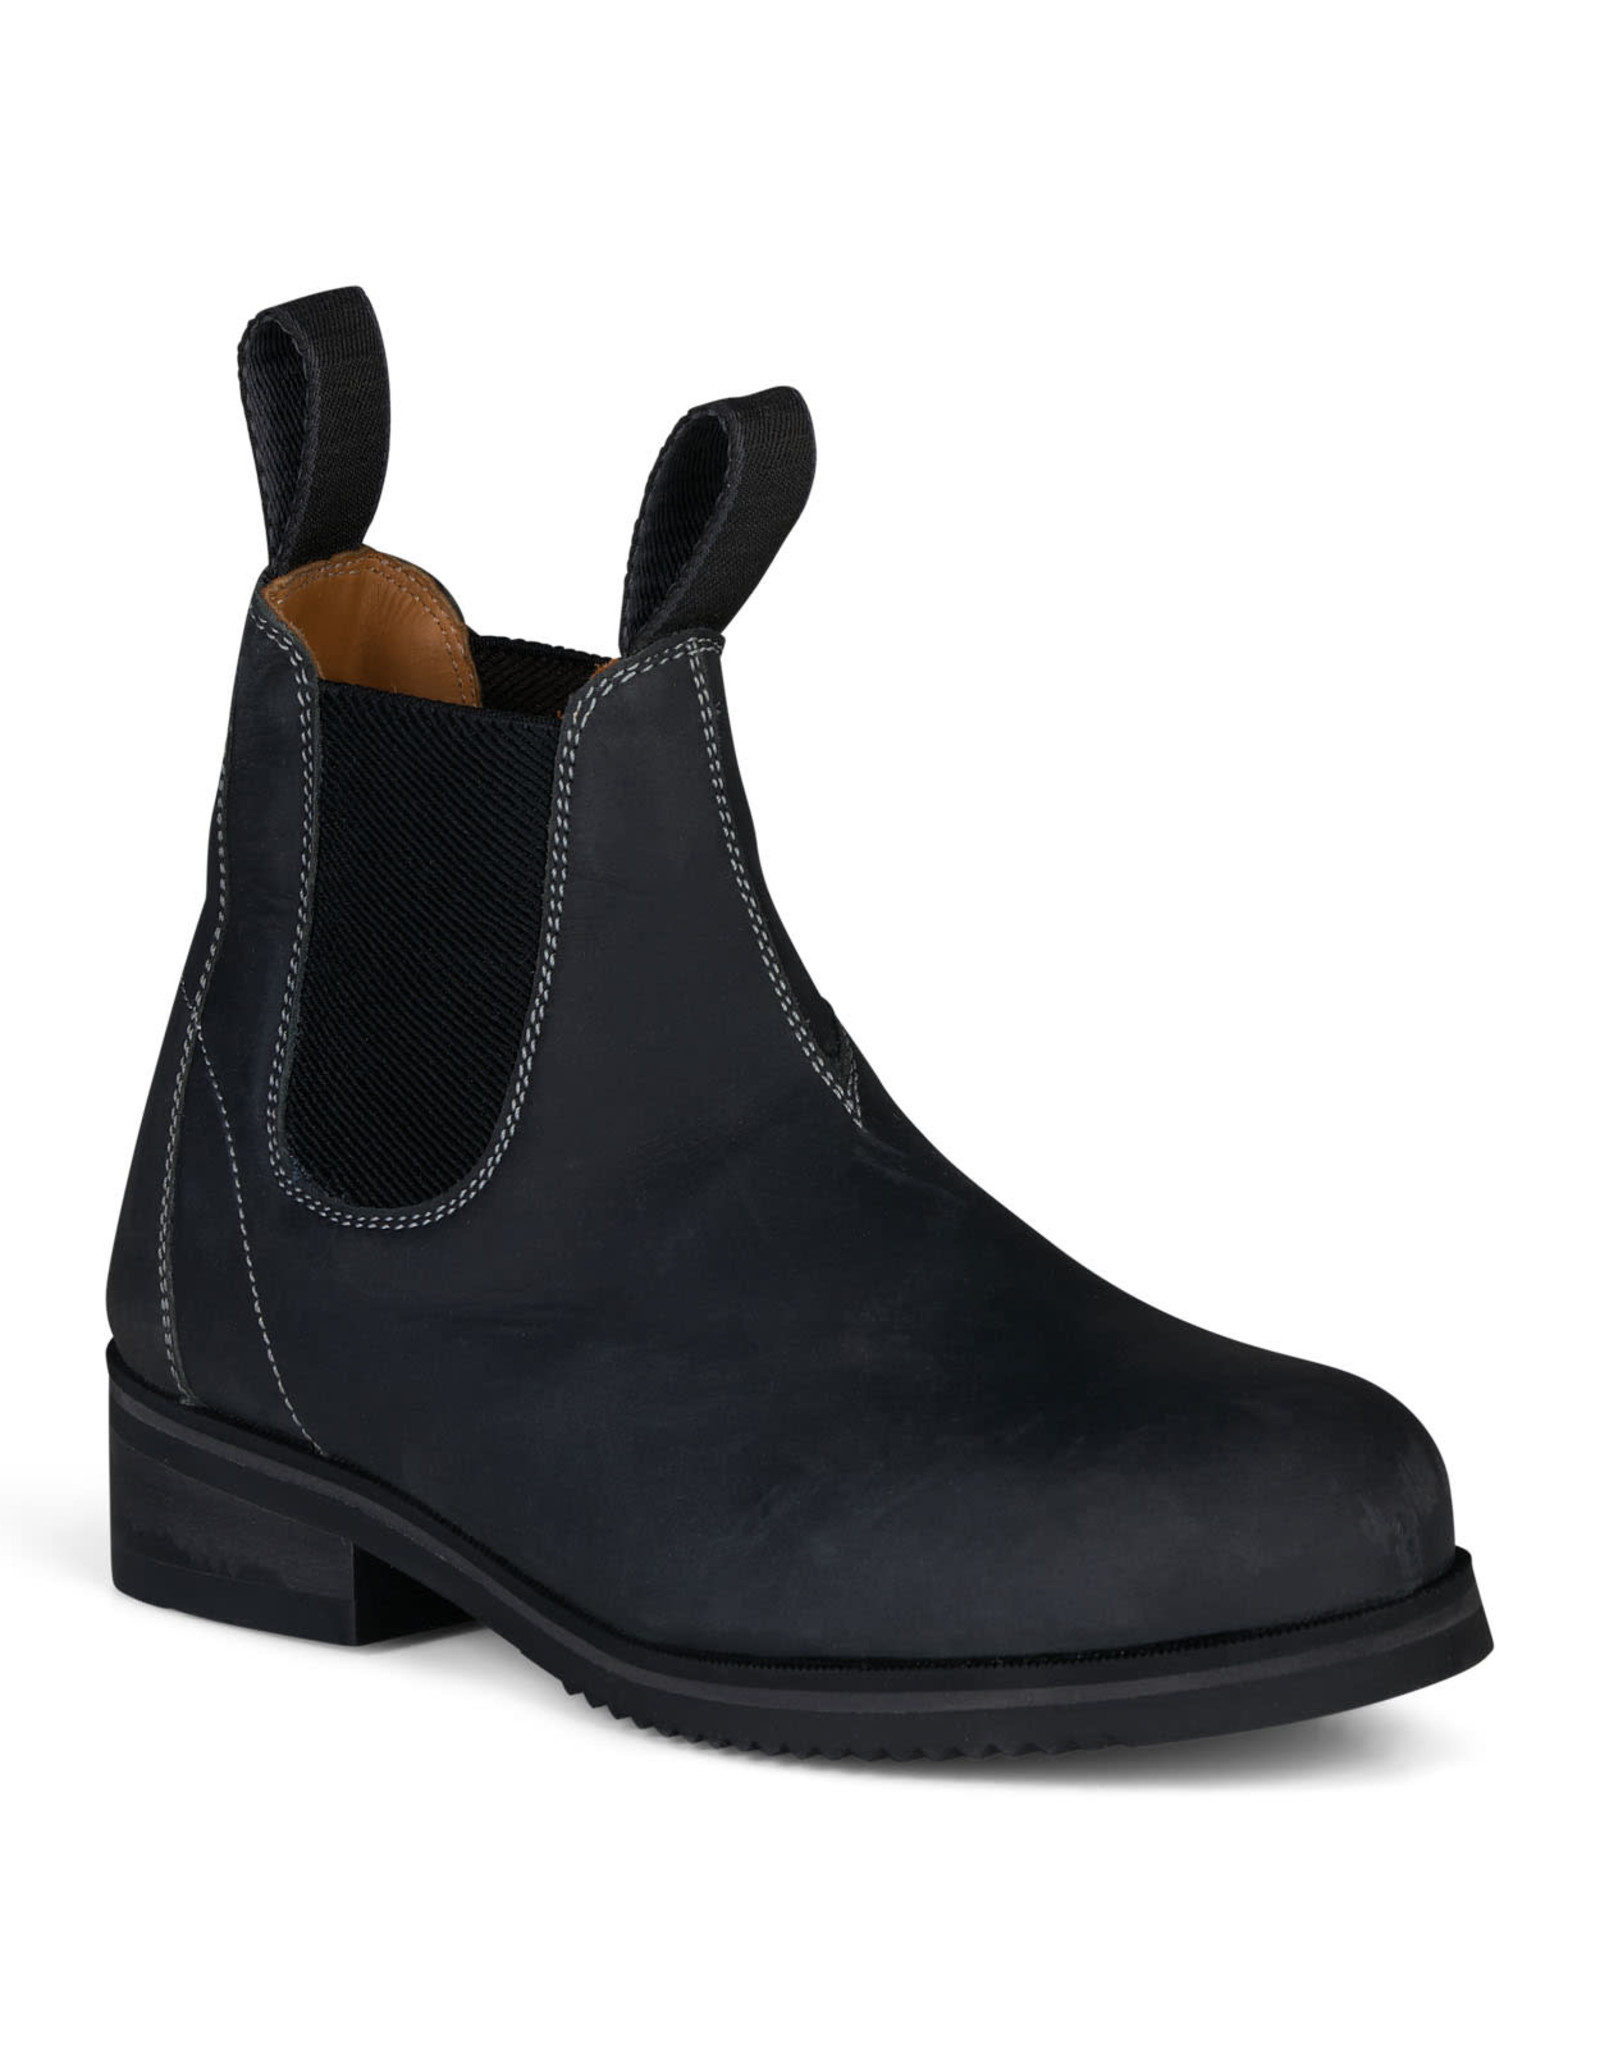 HORZE Morella Toddler Paddock Boots - Black